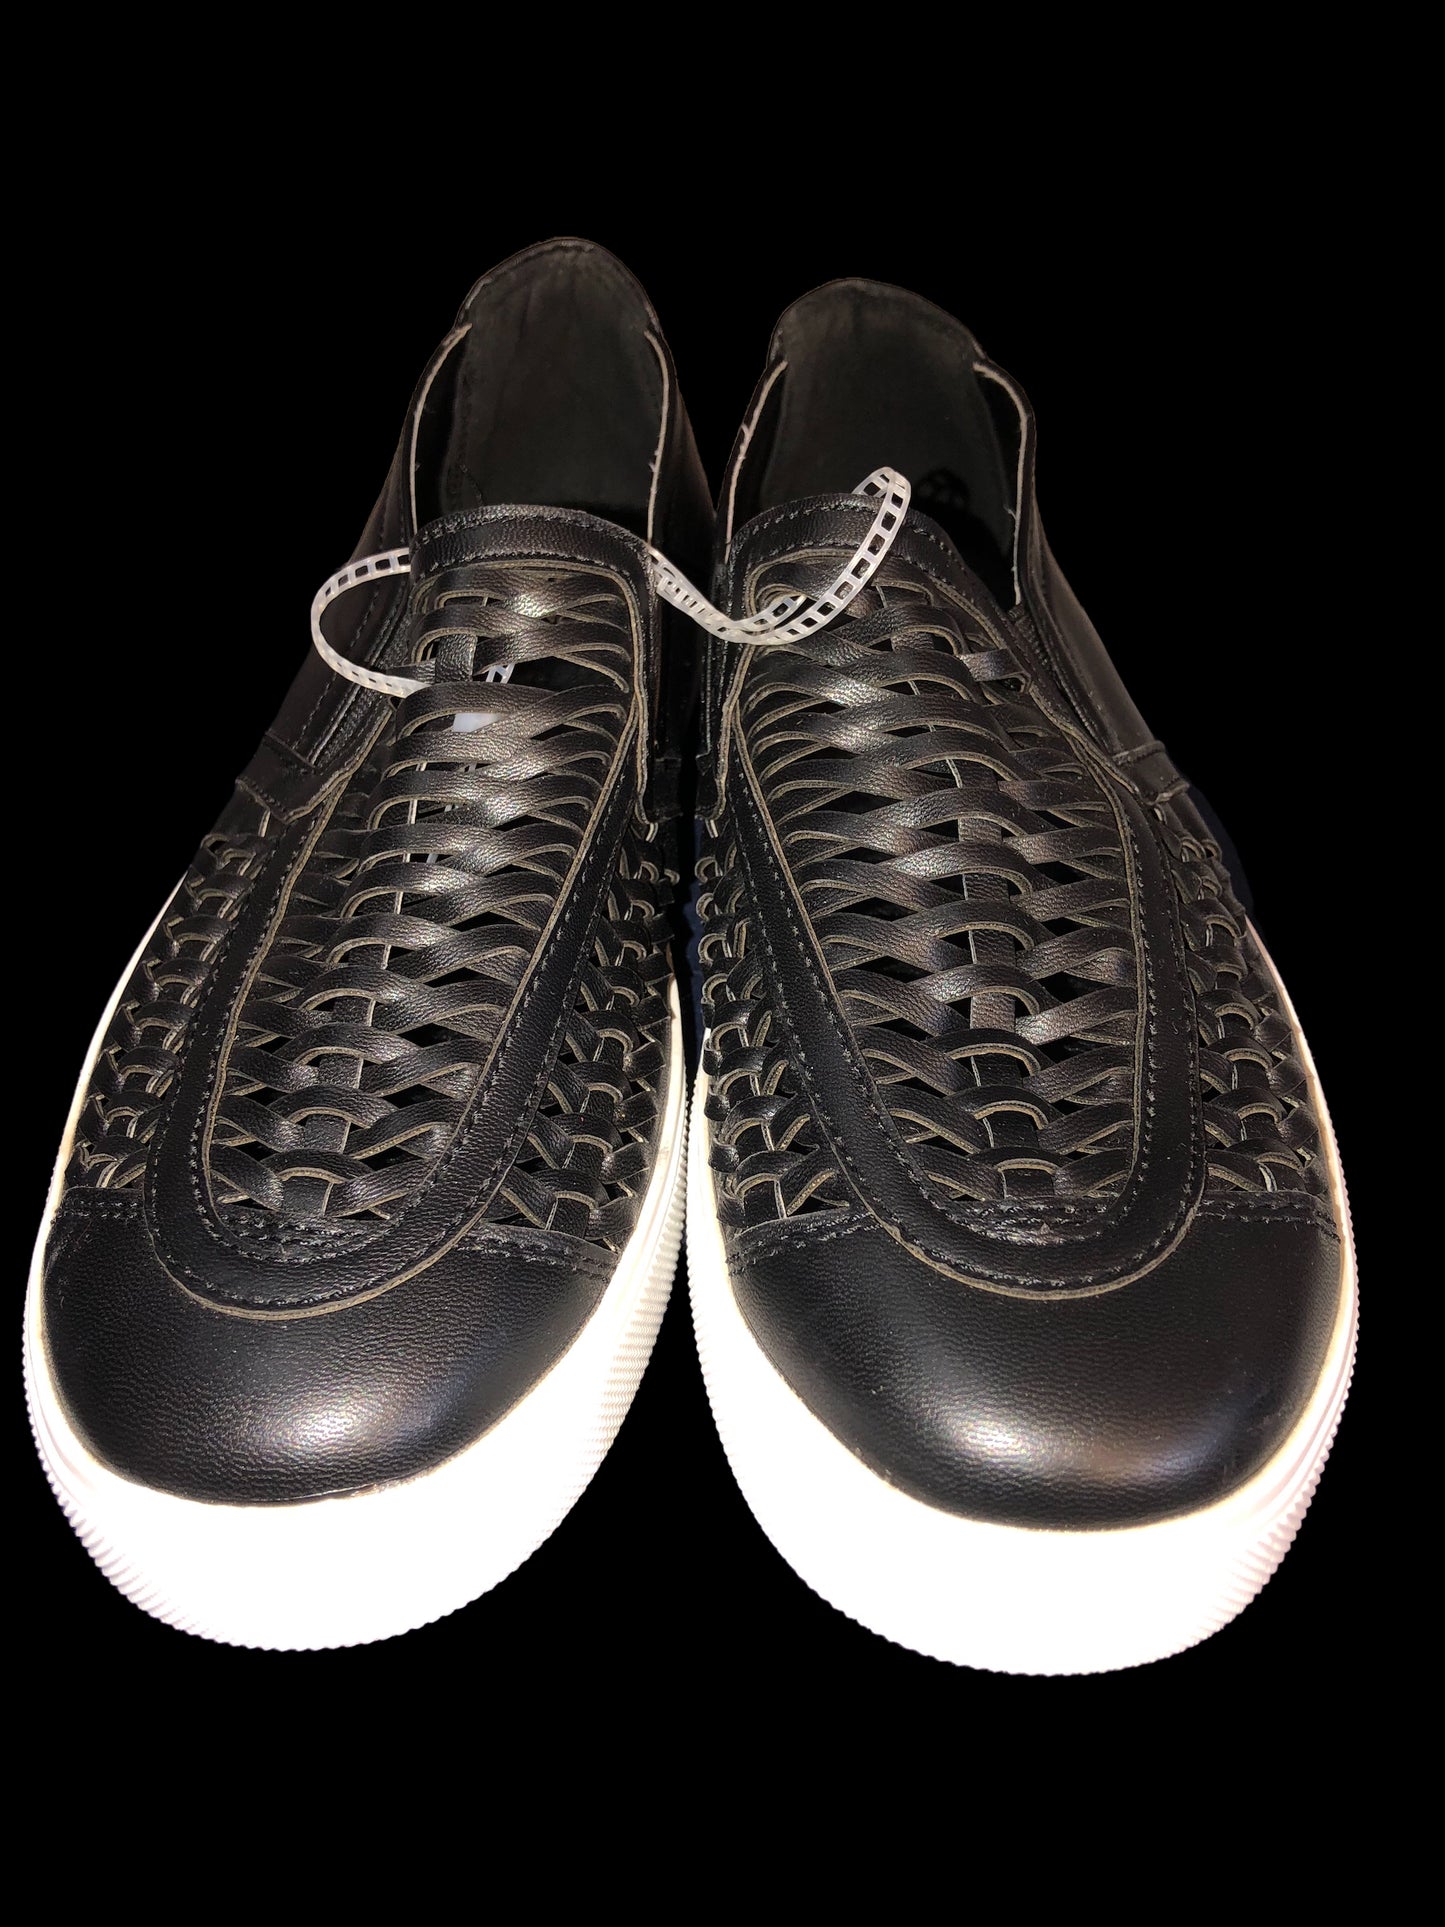 Avon Cushion Walk Black Slip On Shoes - Variety Sales Etc.